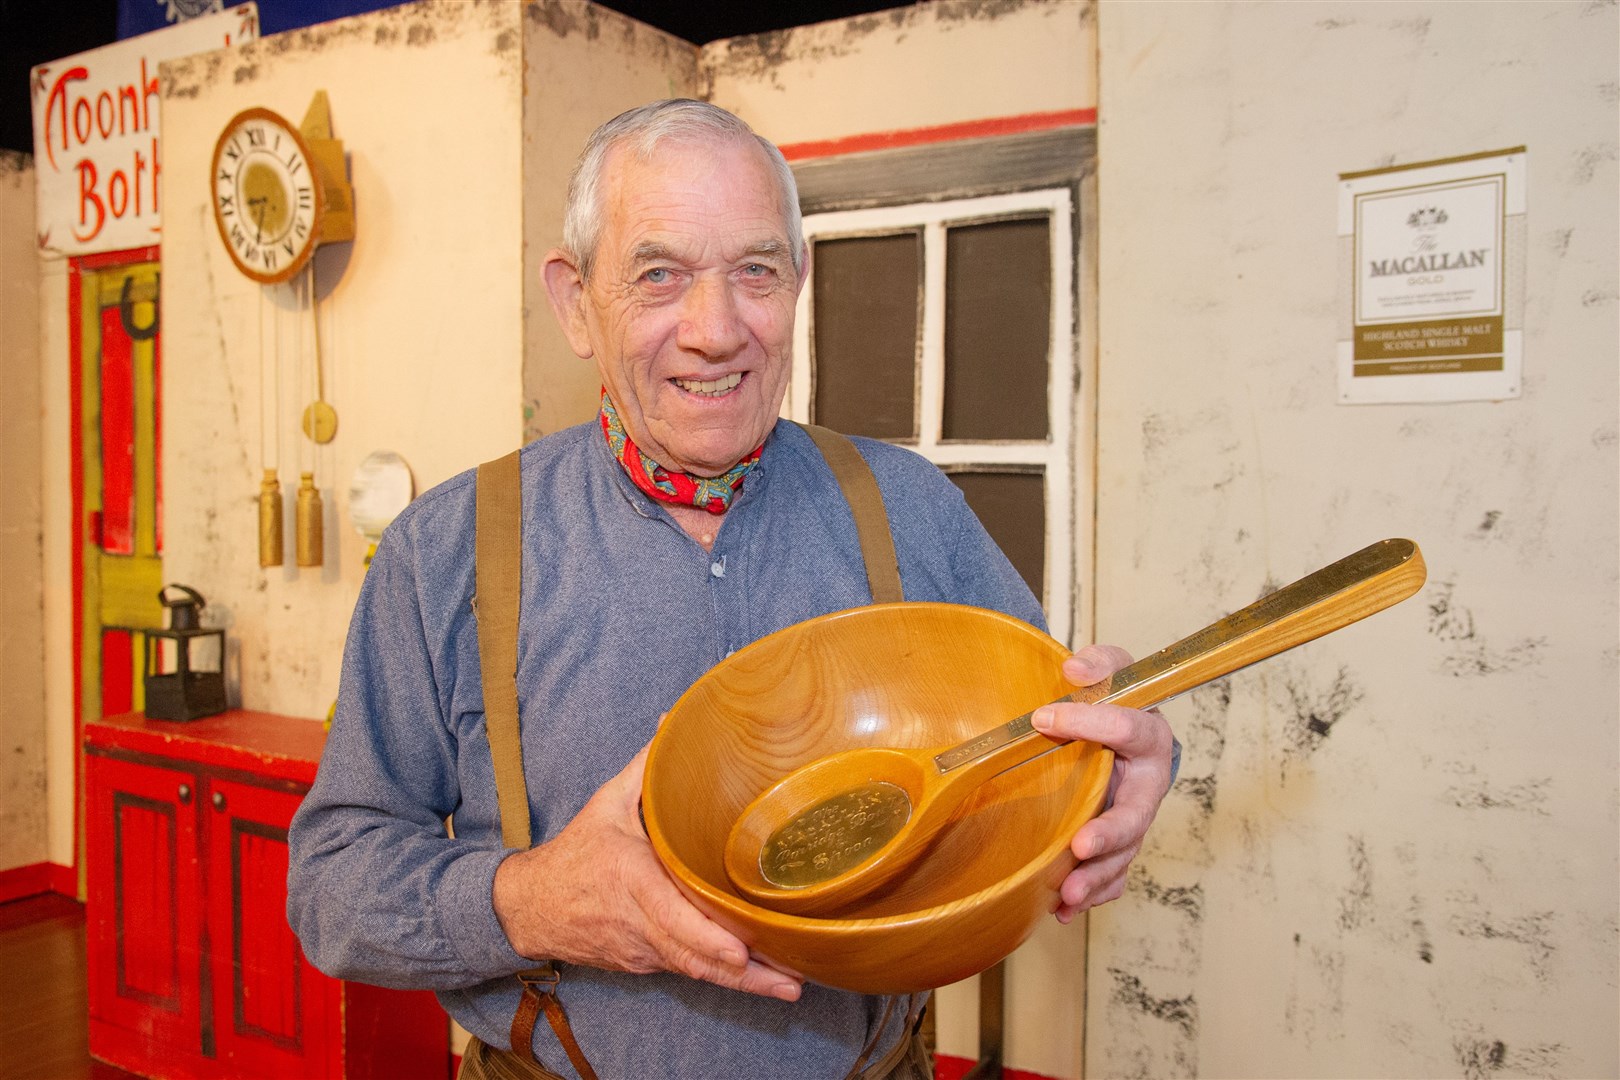 Joe Aitken from Kirriemuir with his prize – The Macallan Porridge Bowl. He also won the Donald Ferguson Medal. Picture: Daniel Forsyth..